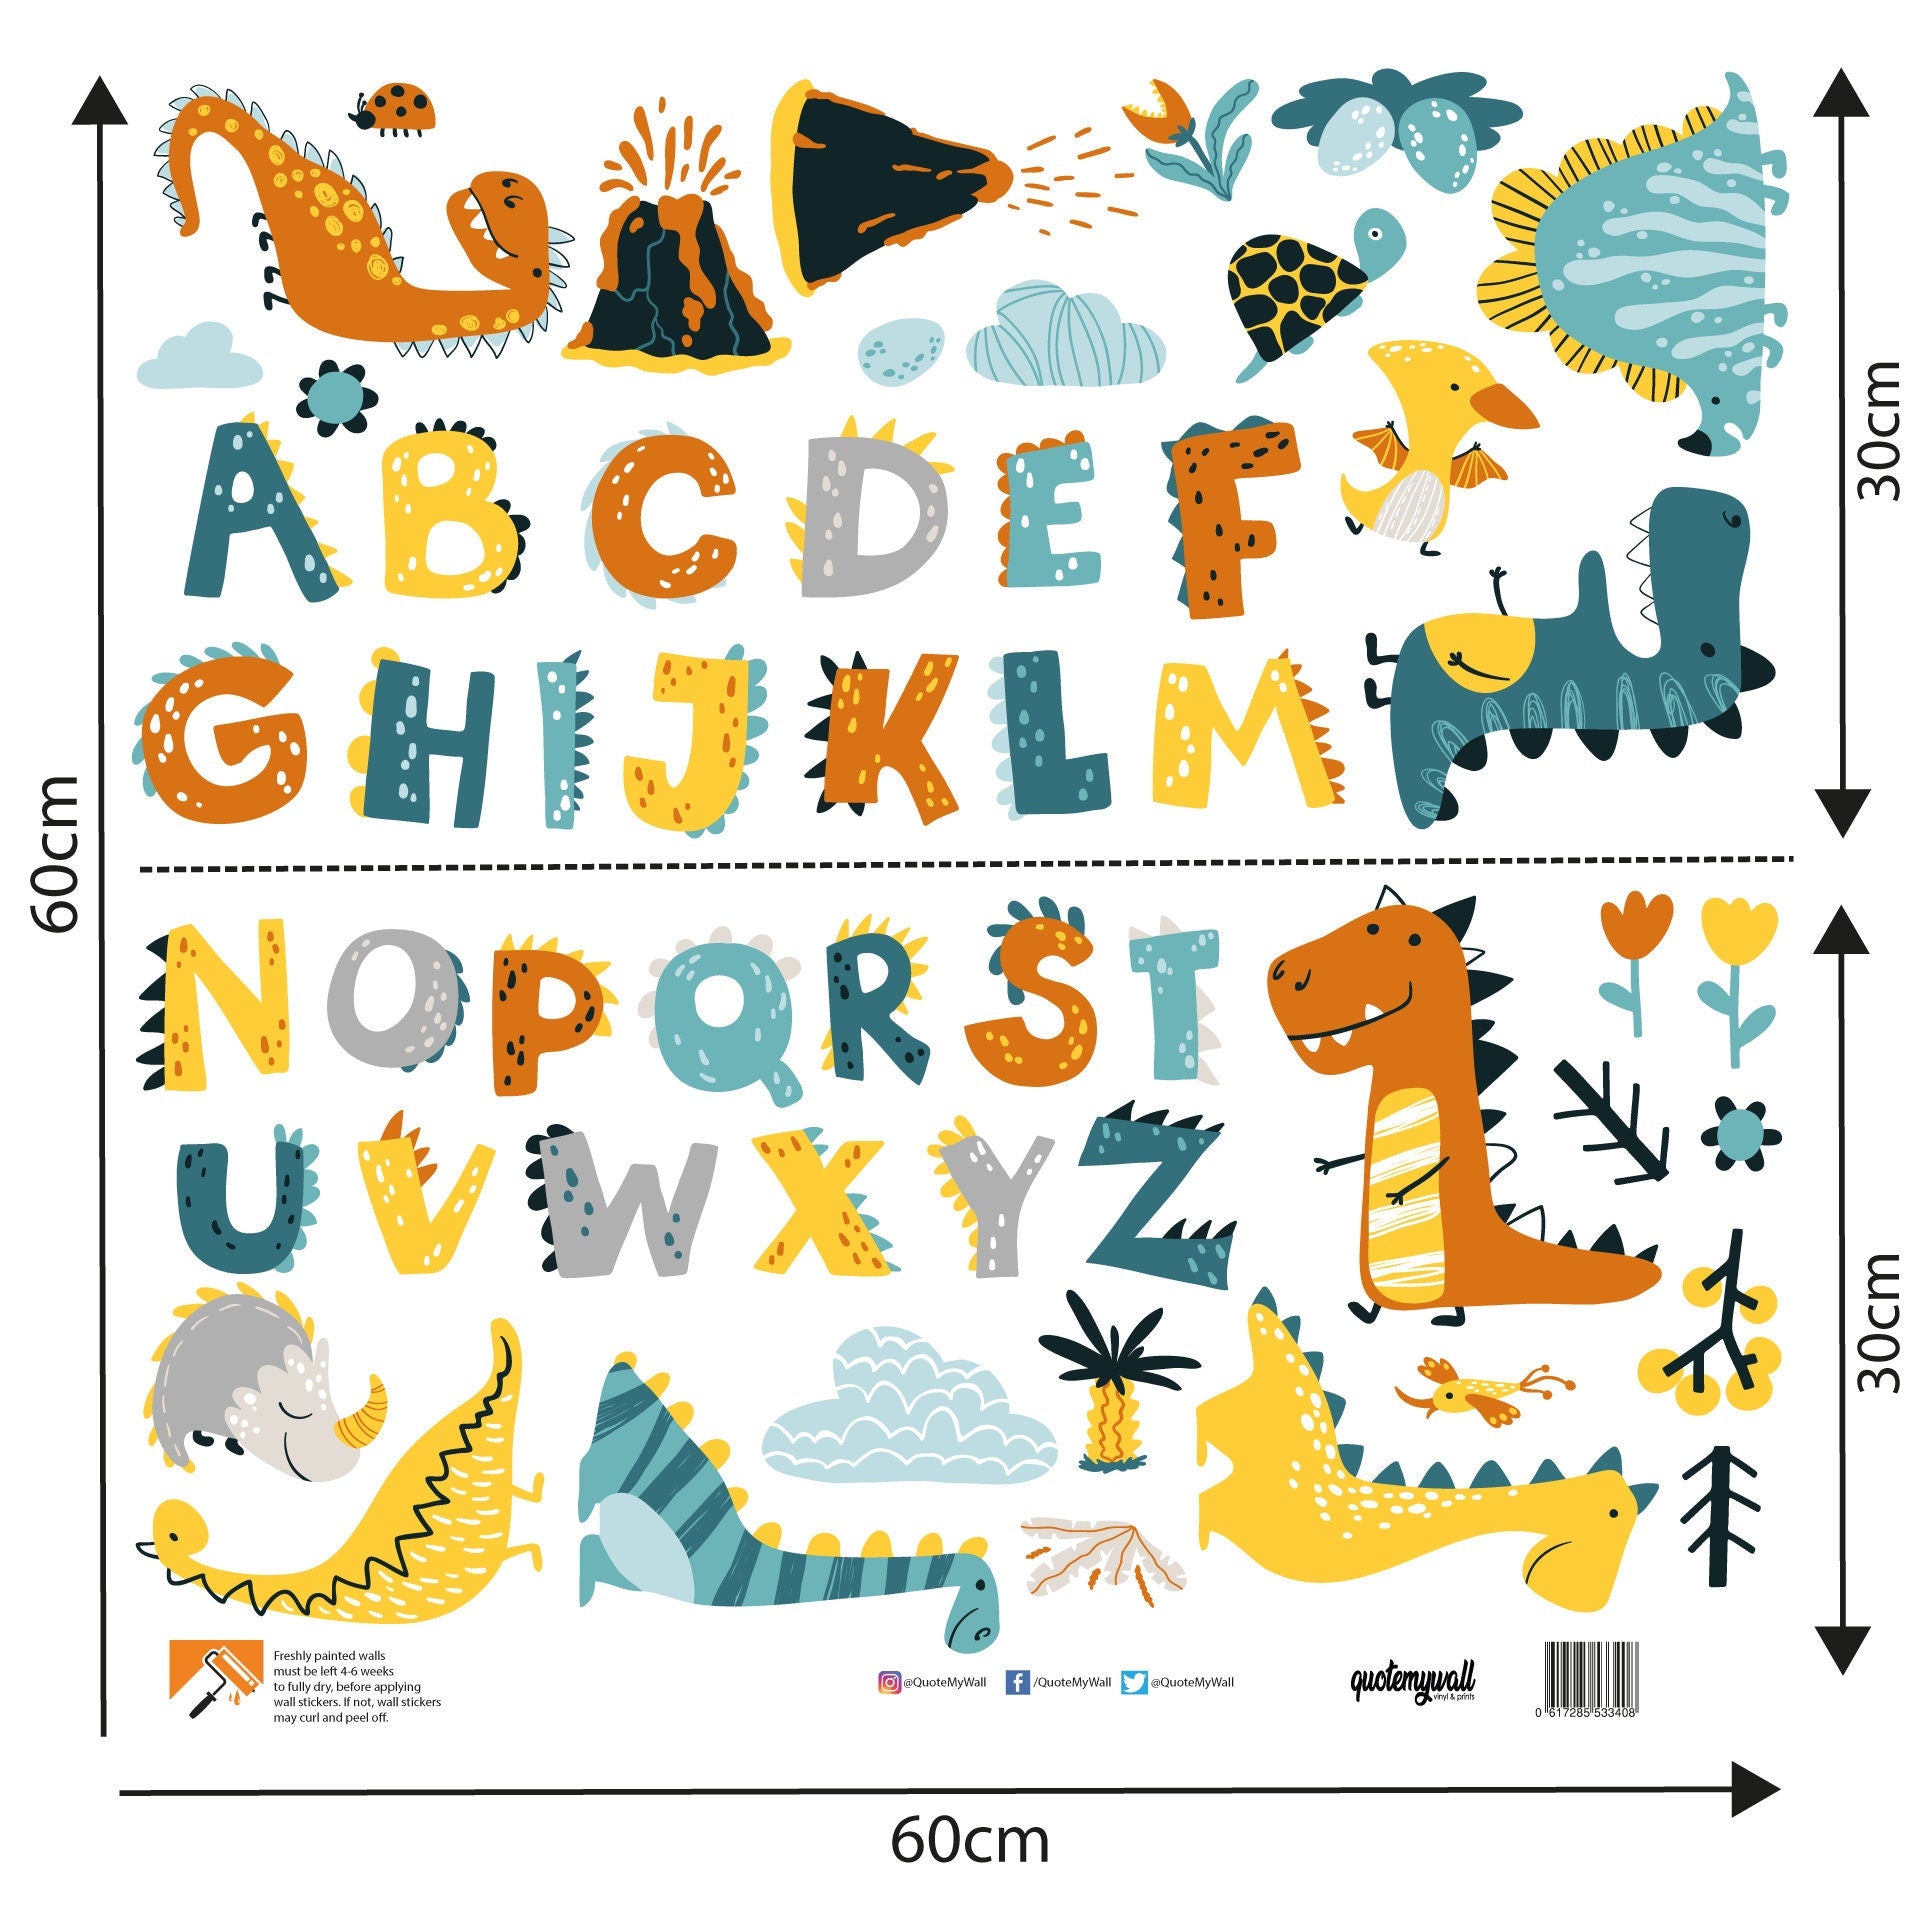 Dinosaur Alphabet Wall Stickers For Kids